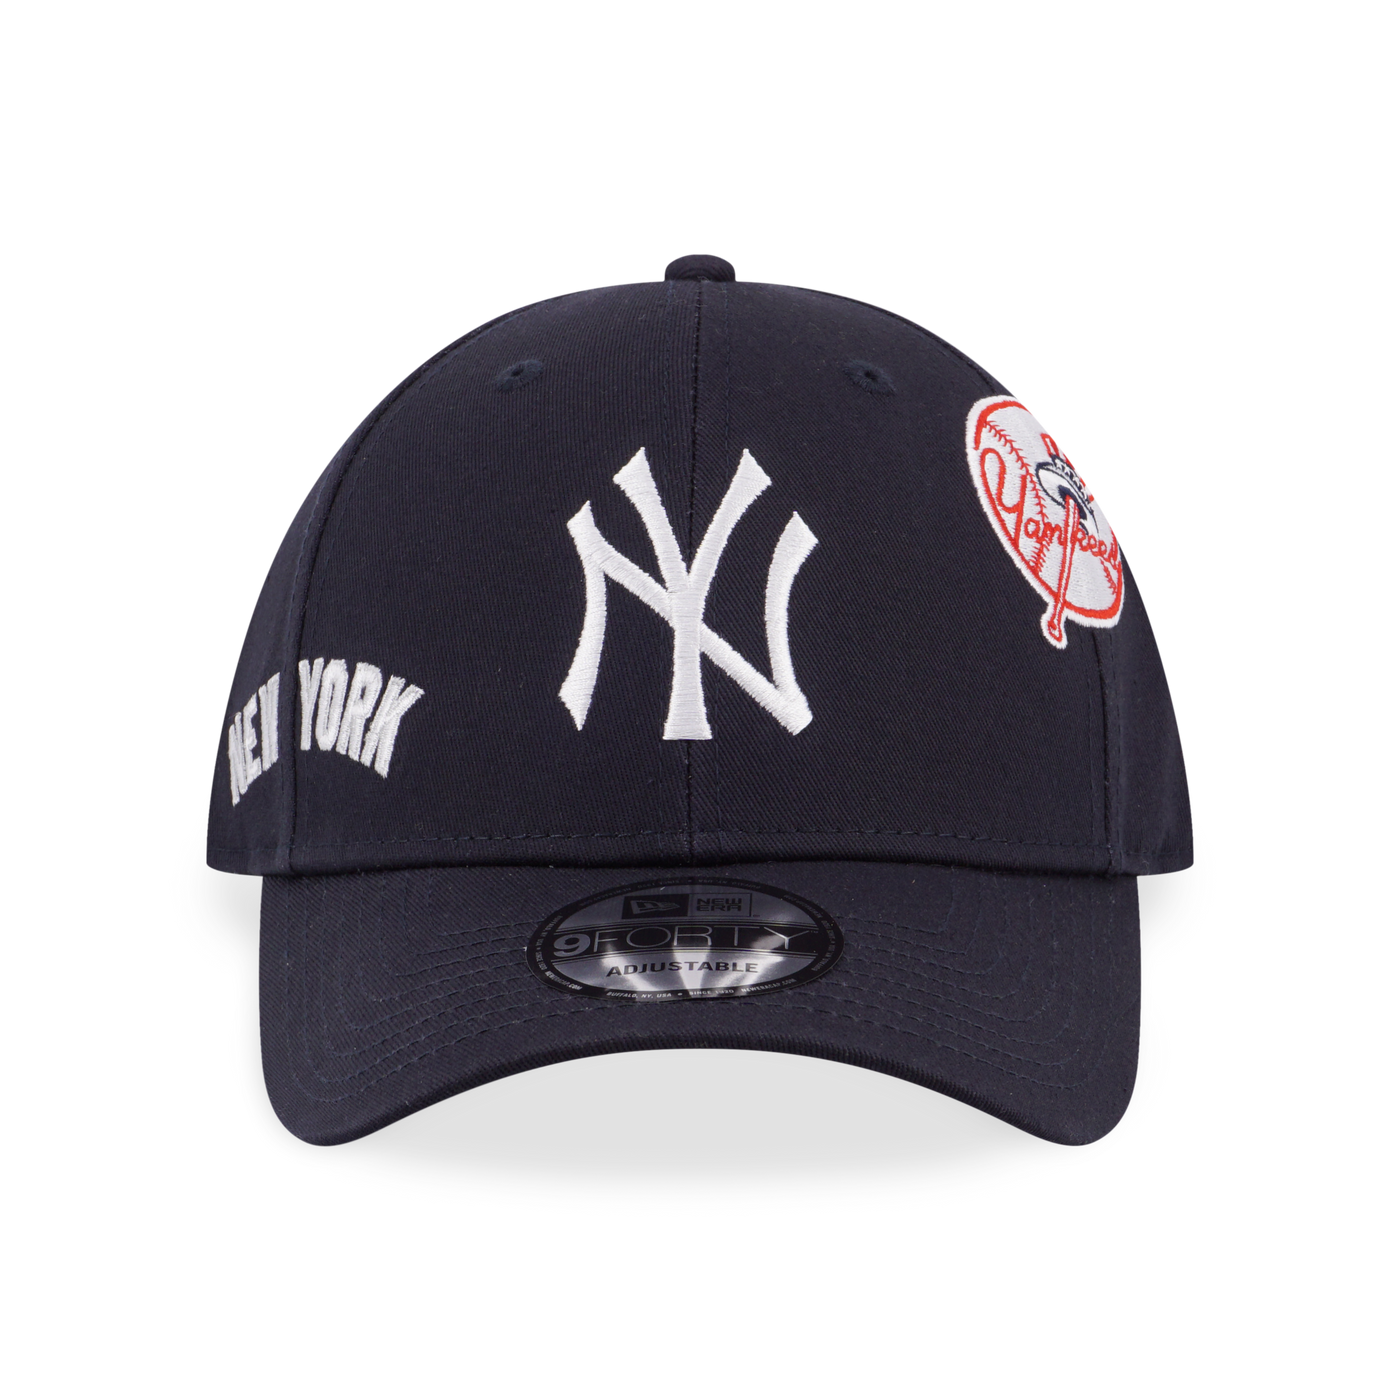 NEW YORK YANKEES LEAGUE MULTI LOGOS NAVY 9FORTY CAP